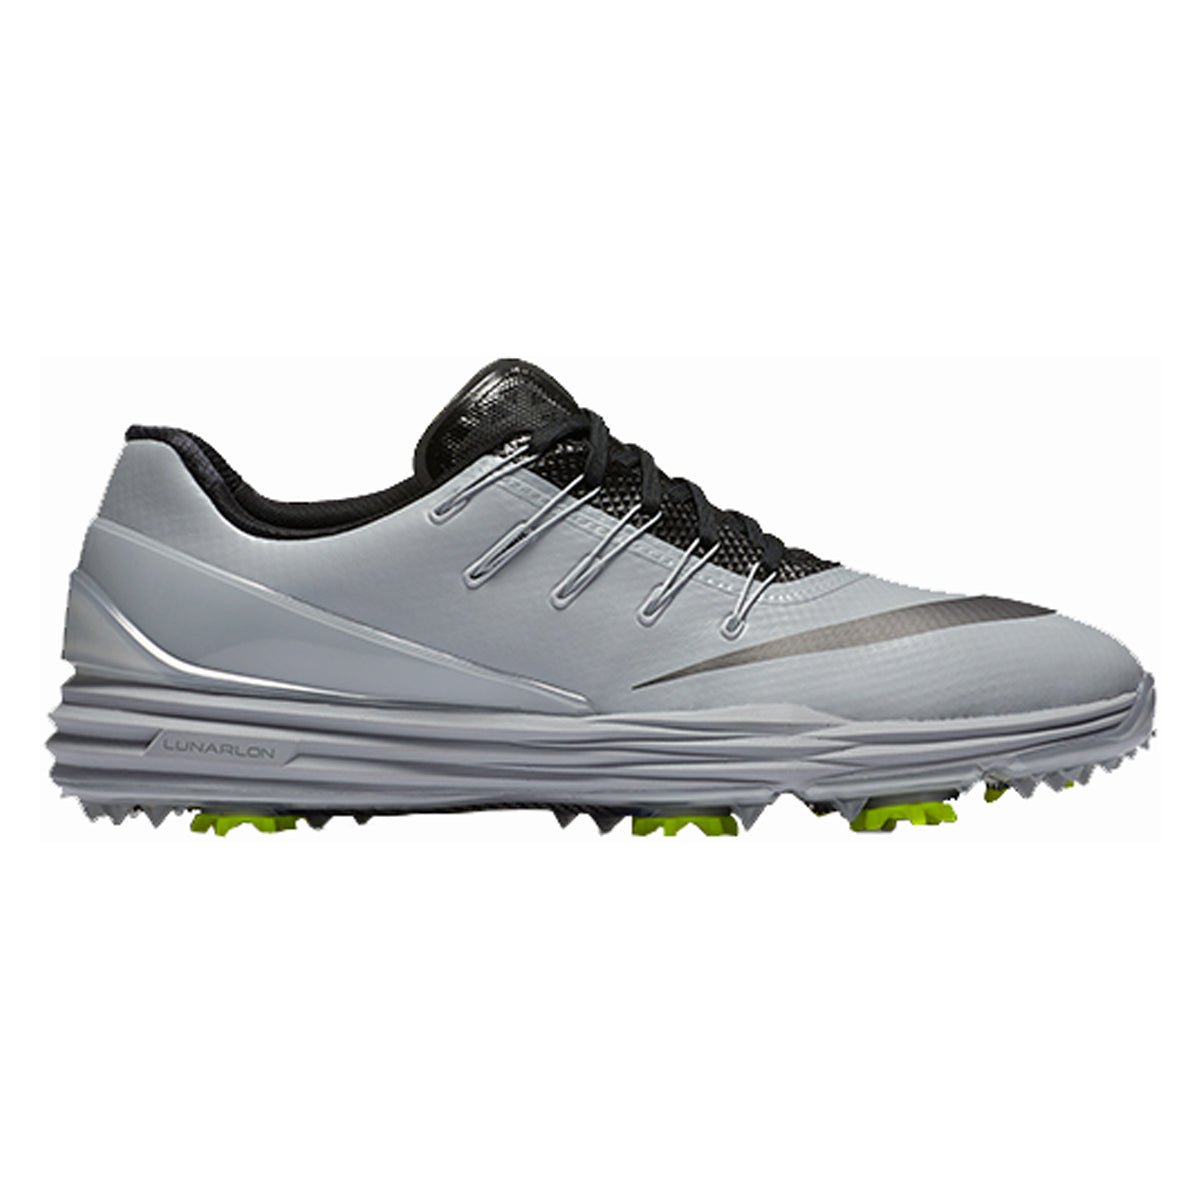 Nike Golfschuhe 2015